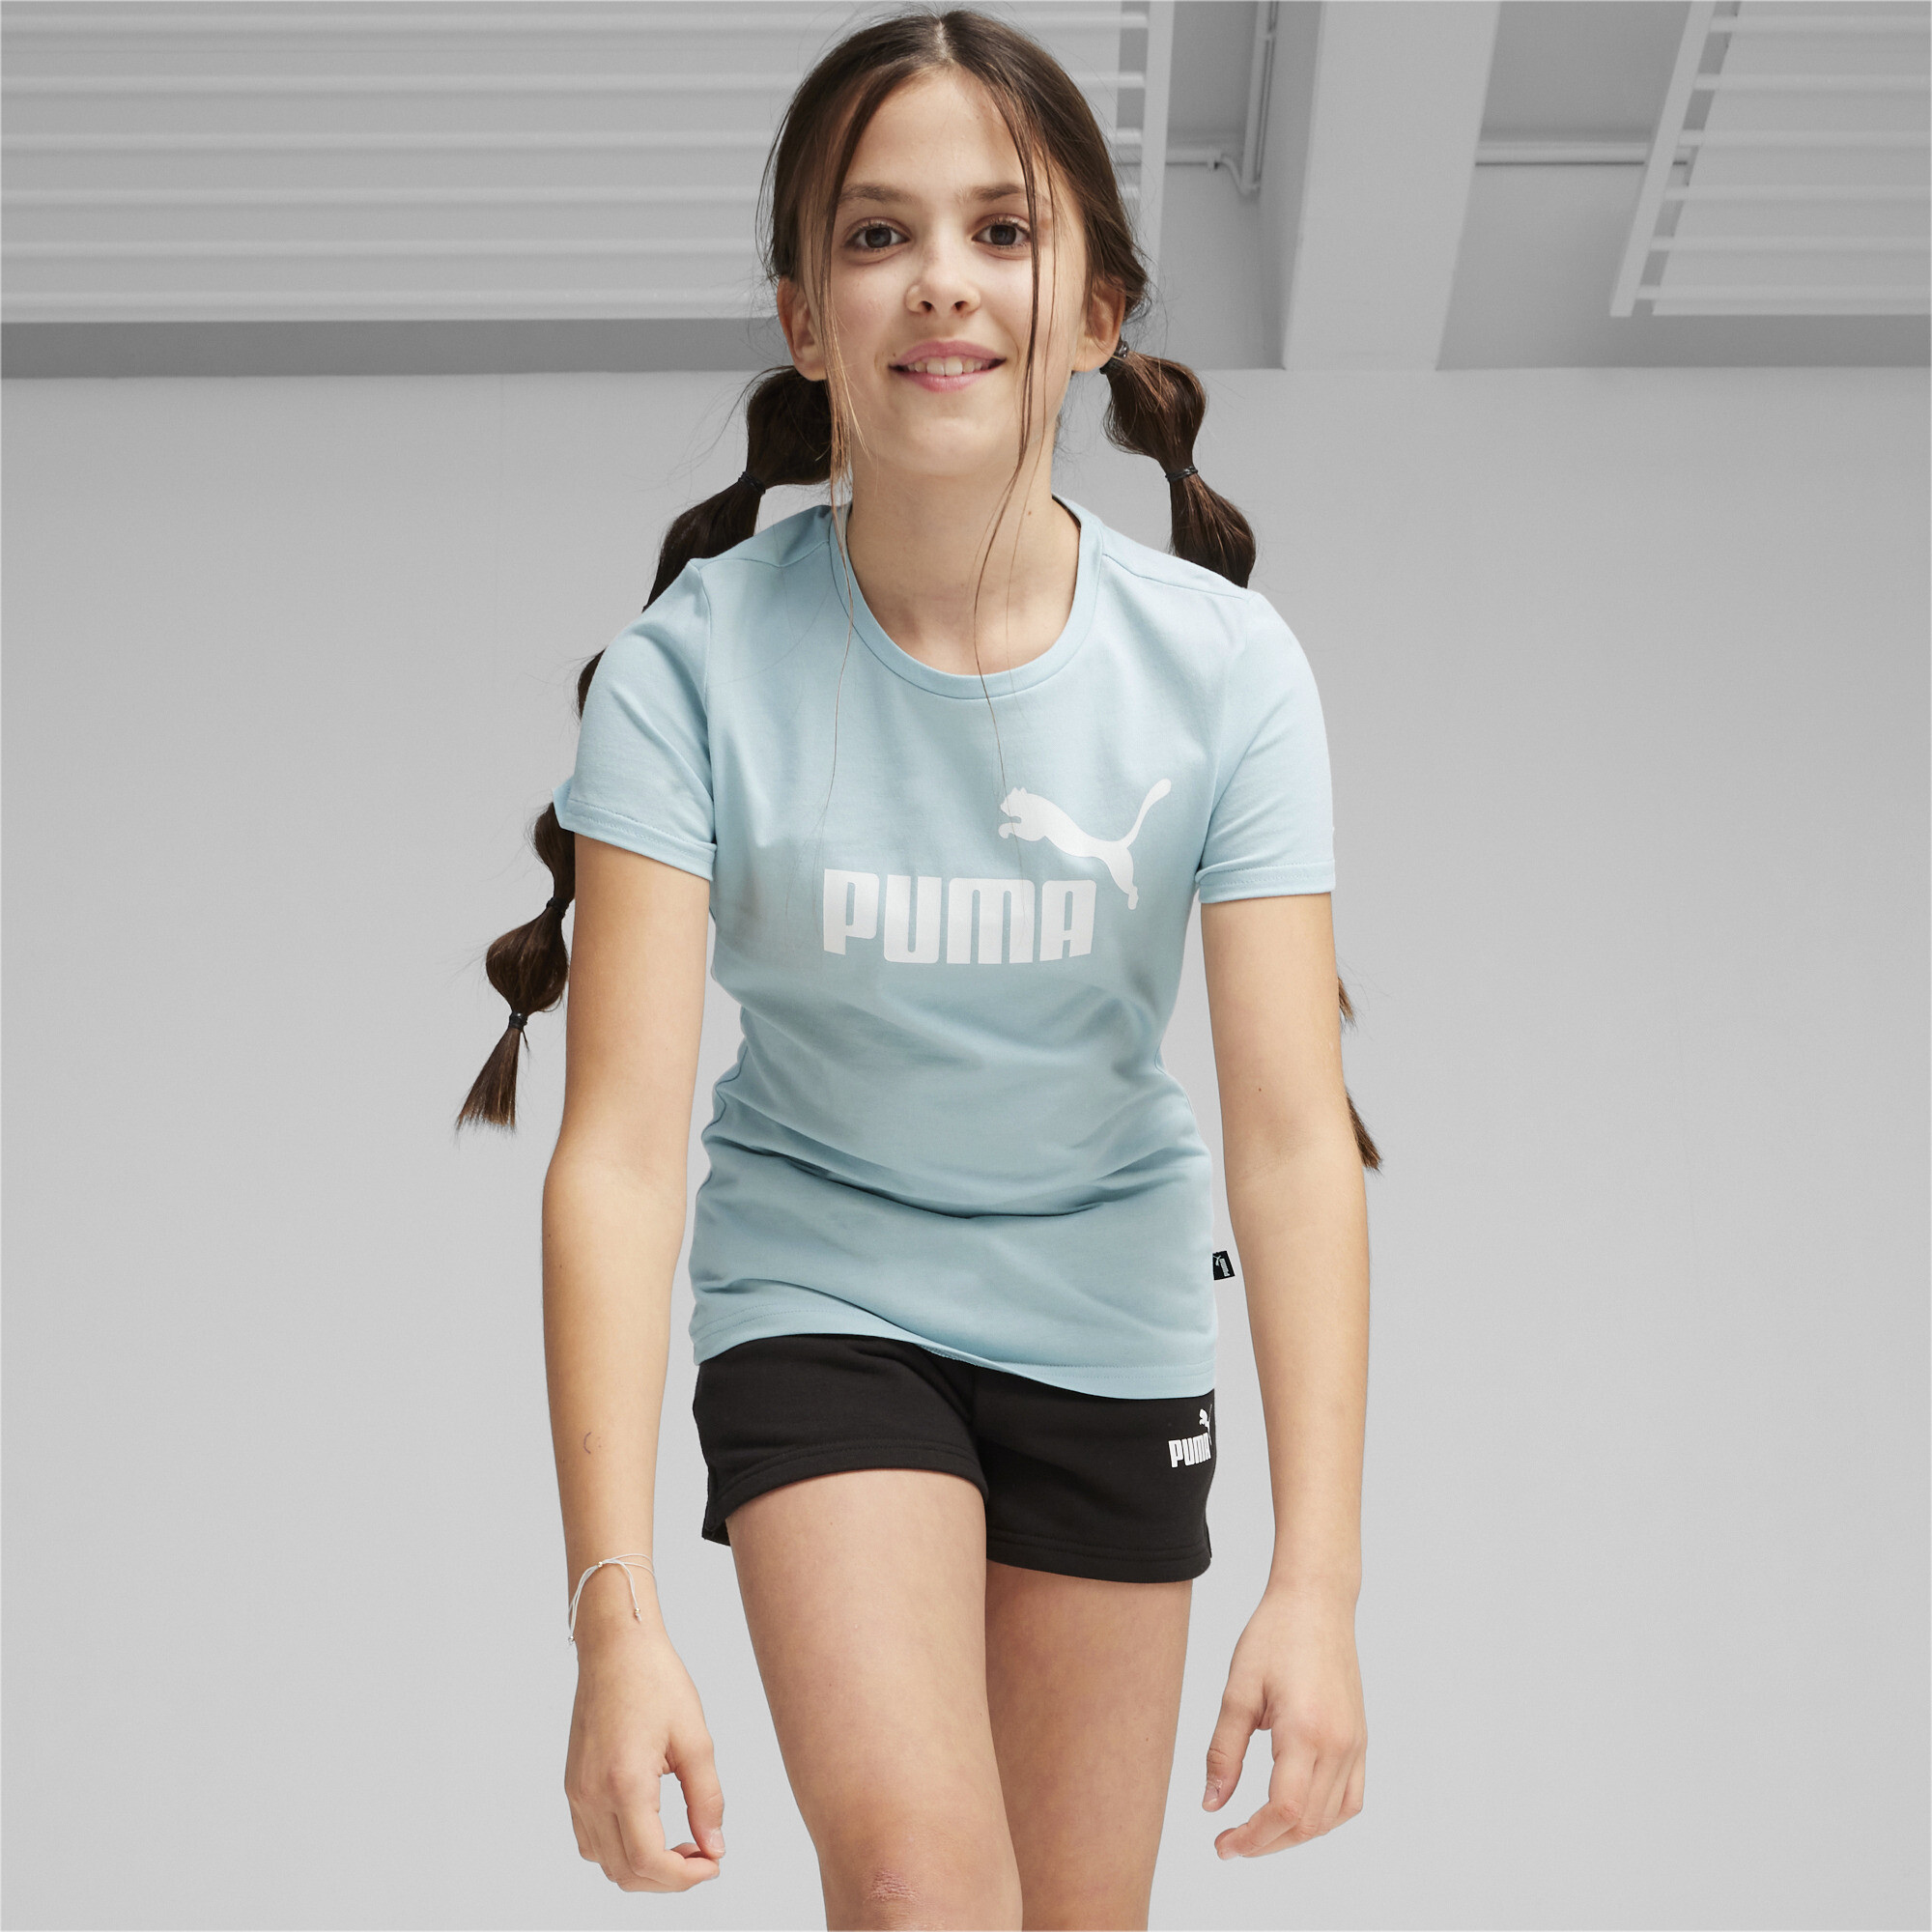 Women's Puma Logo Tee And Shorts Youth Set, Blue, Size 11-12Y, Clothing